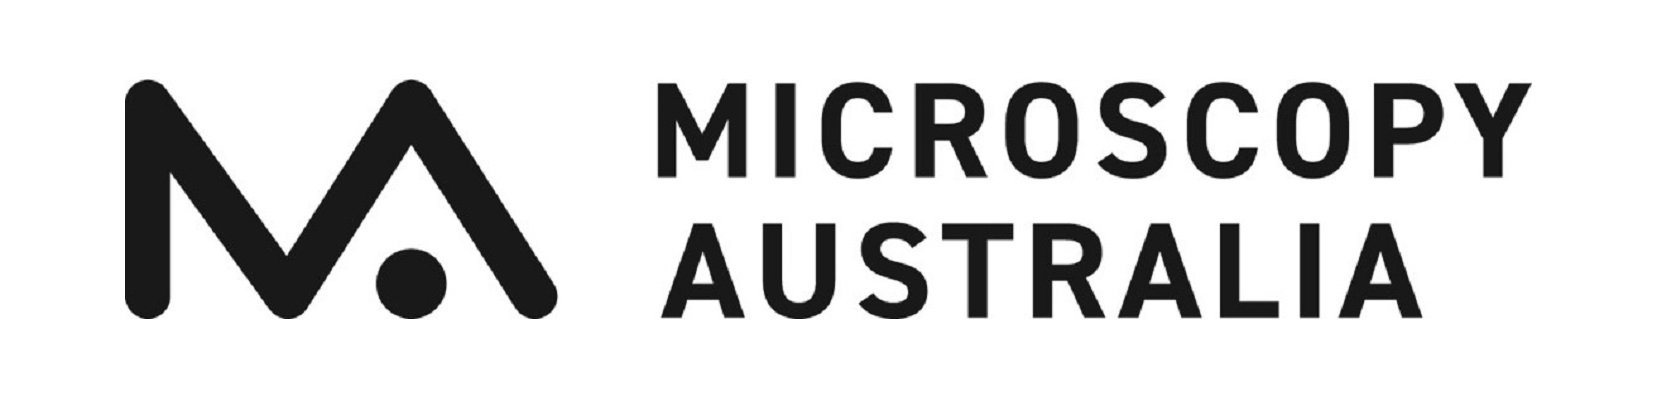 Microscopy Australia logo